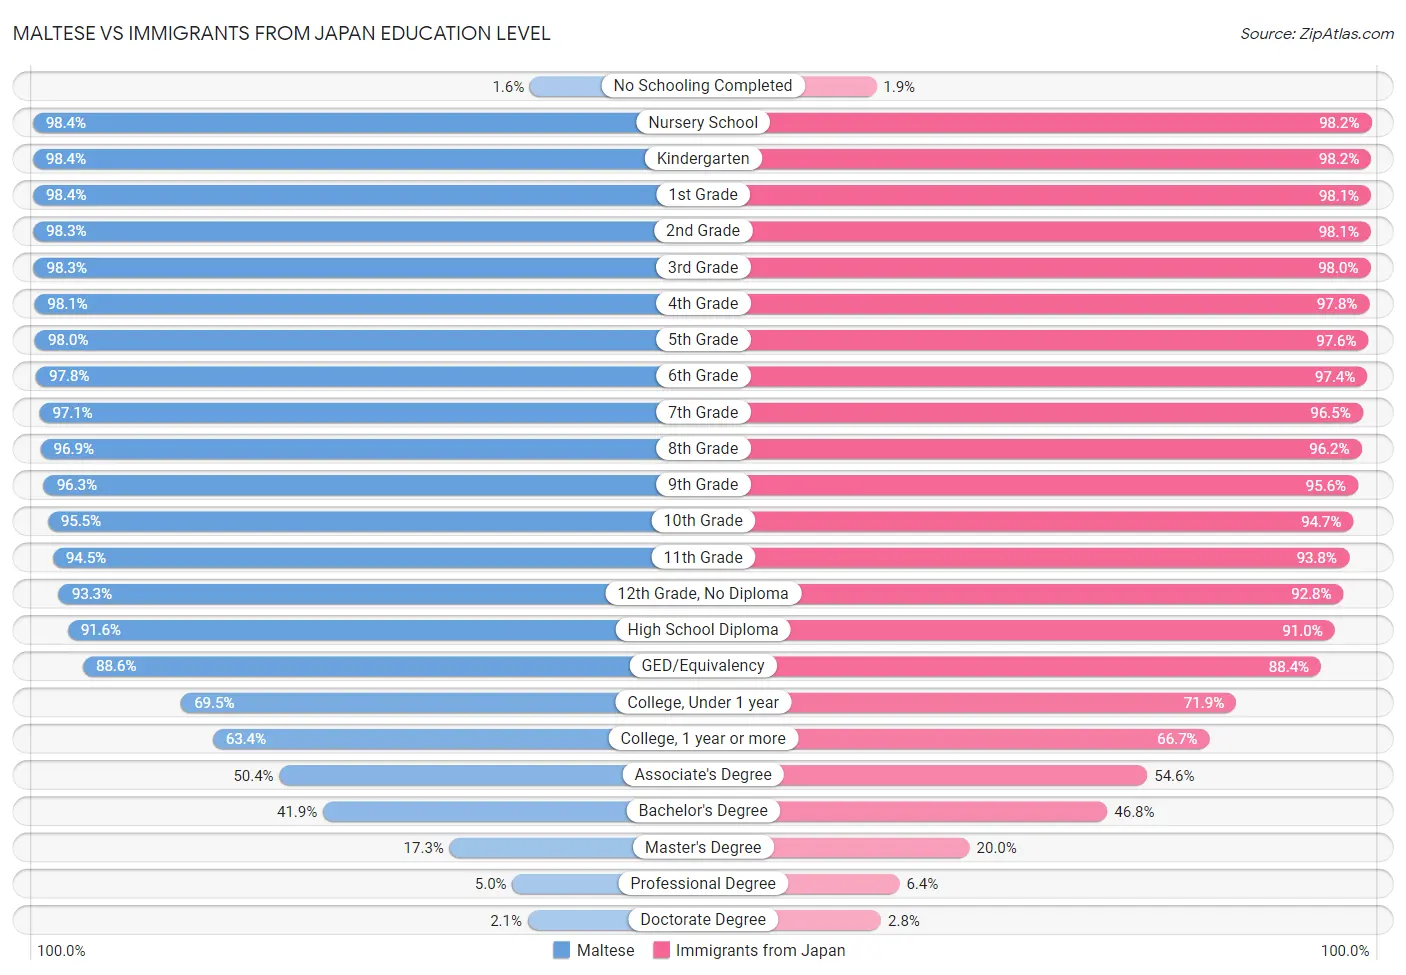 Maltese vs Immigrants from Japan Education Level